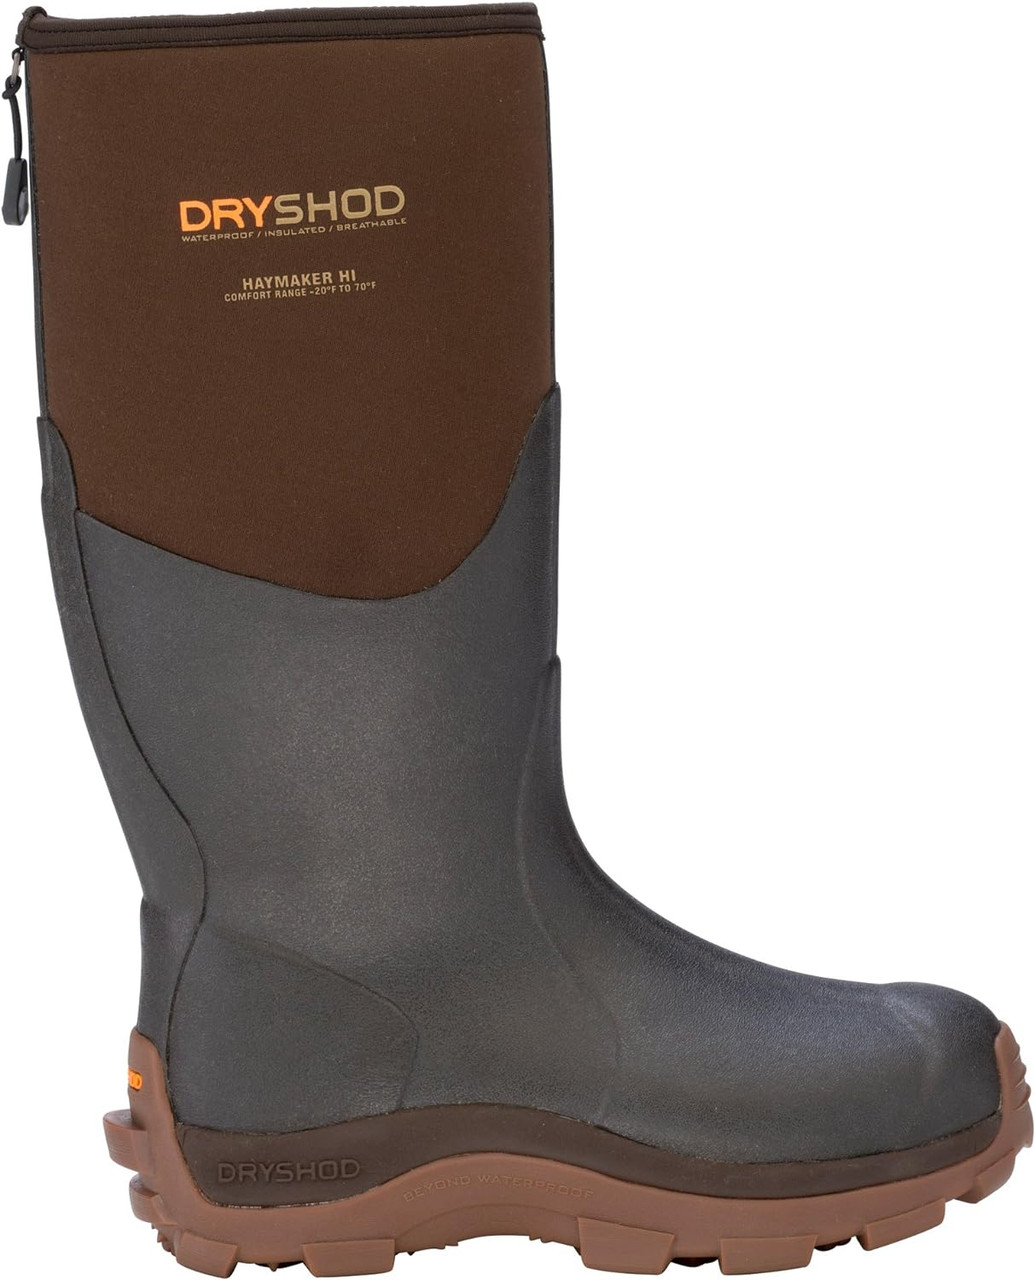 Dryshod Haymaker Hi Cut Work Boot Brown Peanut Size 12 HAY-MH-BR-12